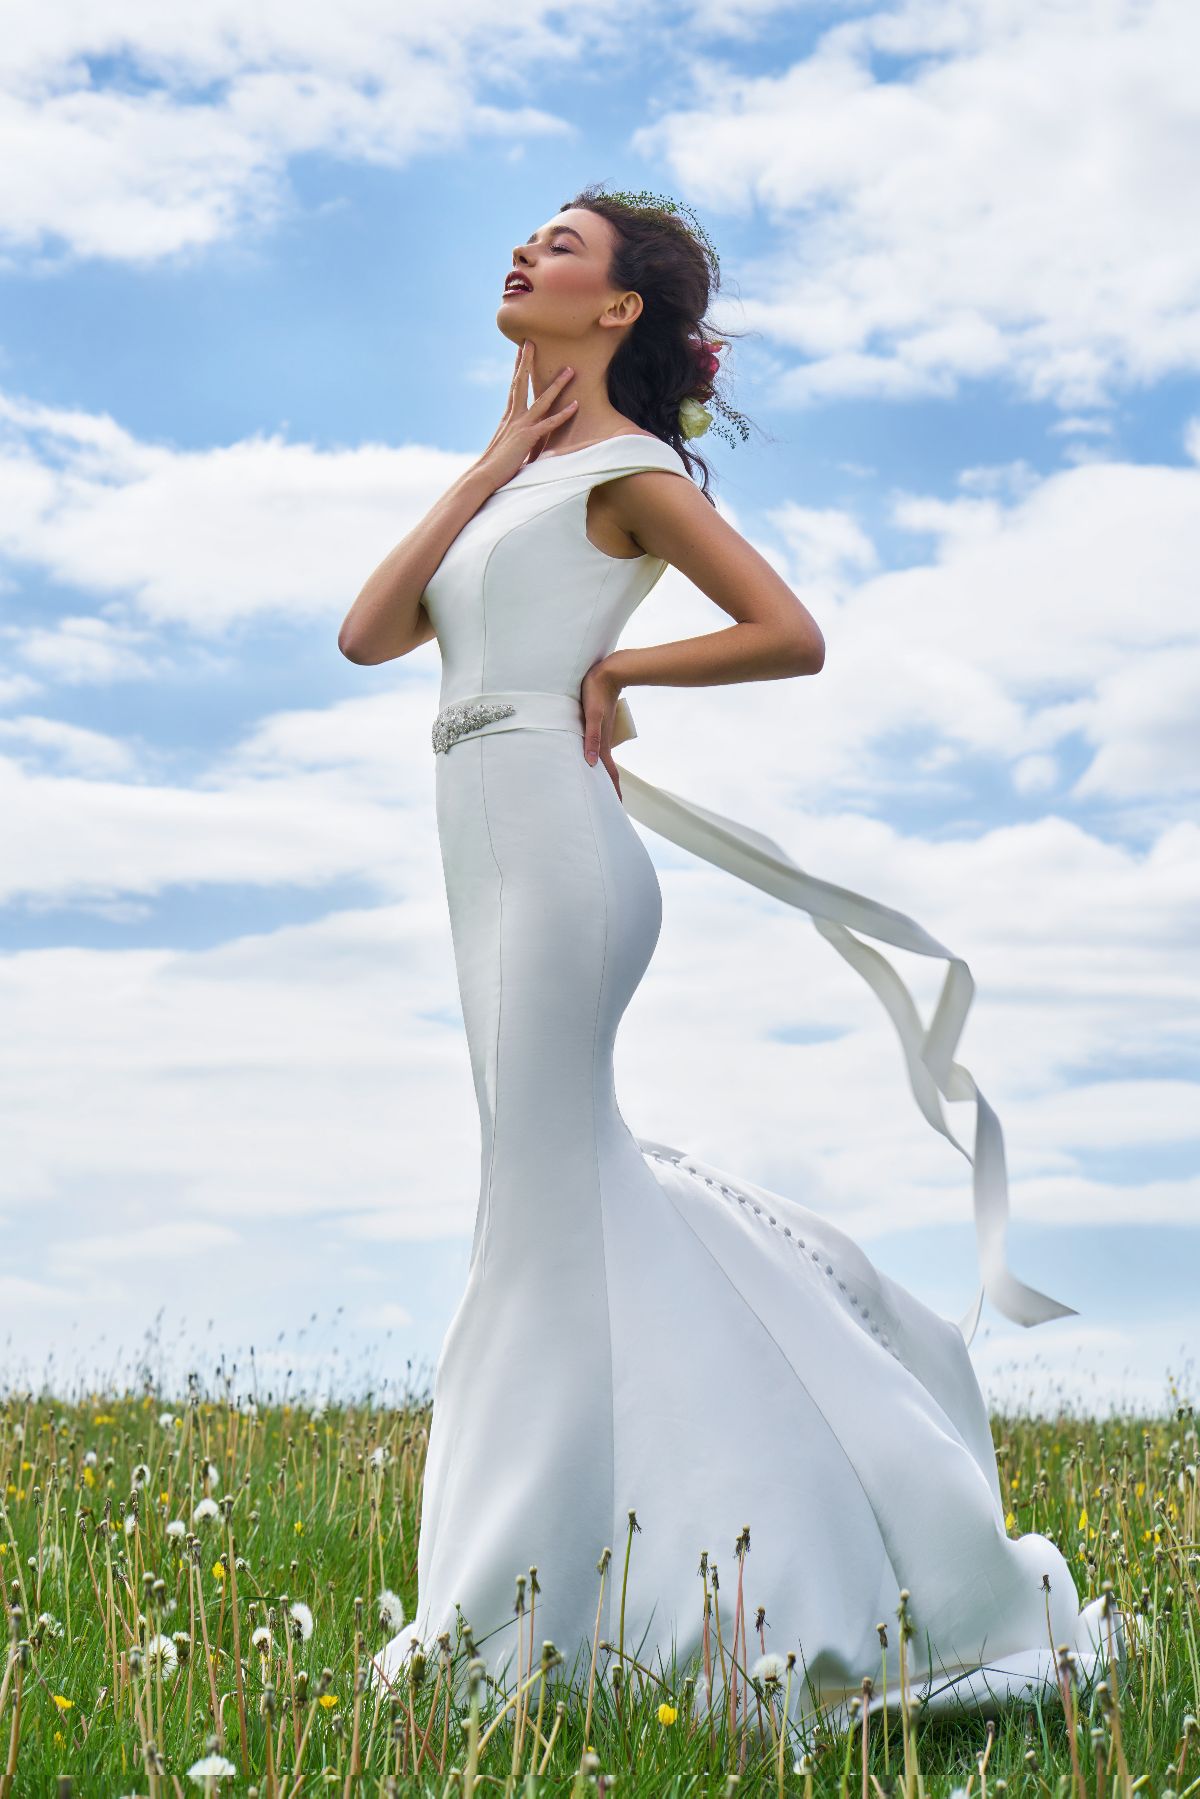 Best Dress 2 Impress Bridal-Image-95